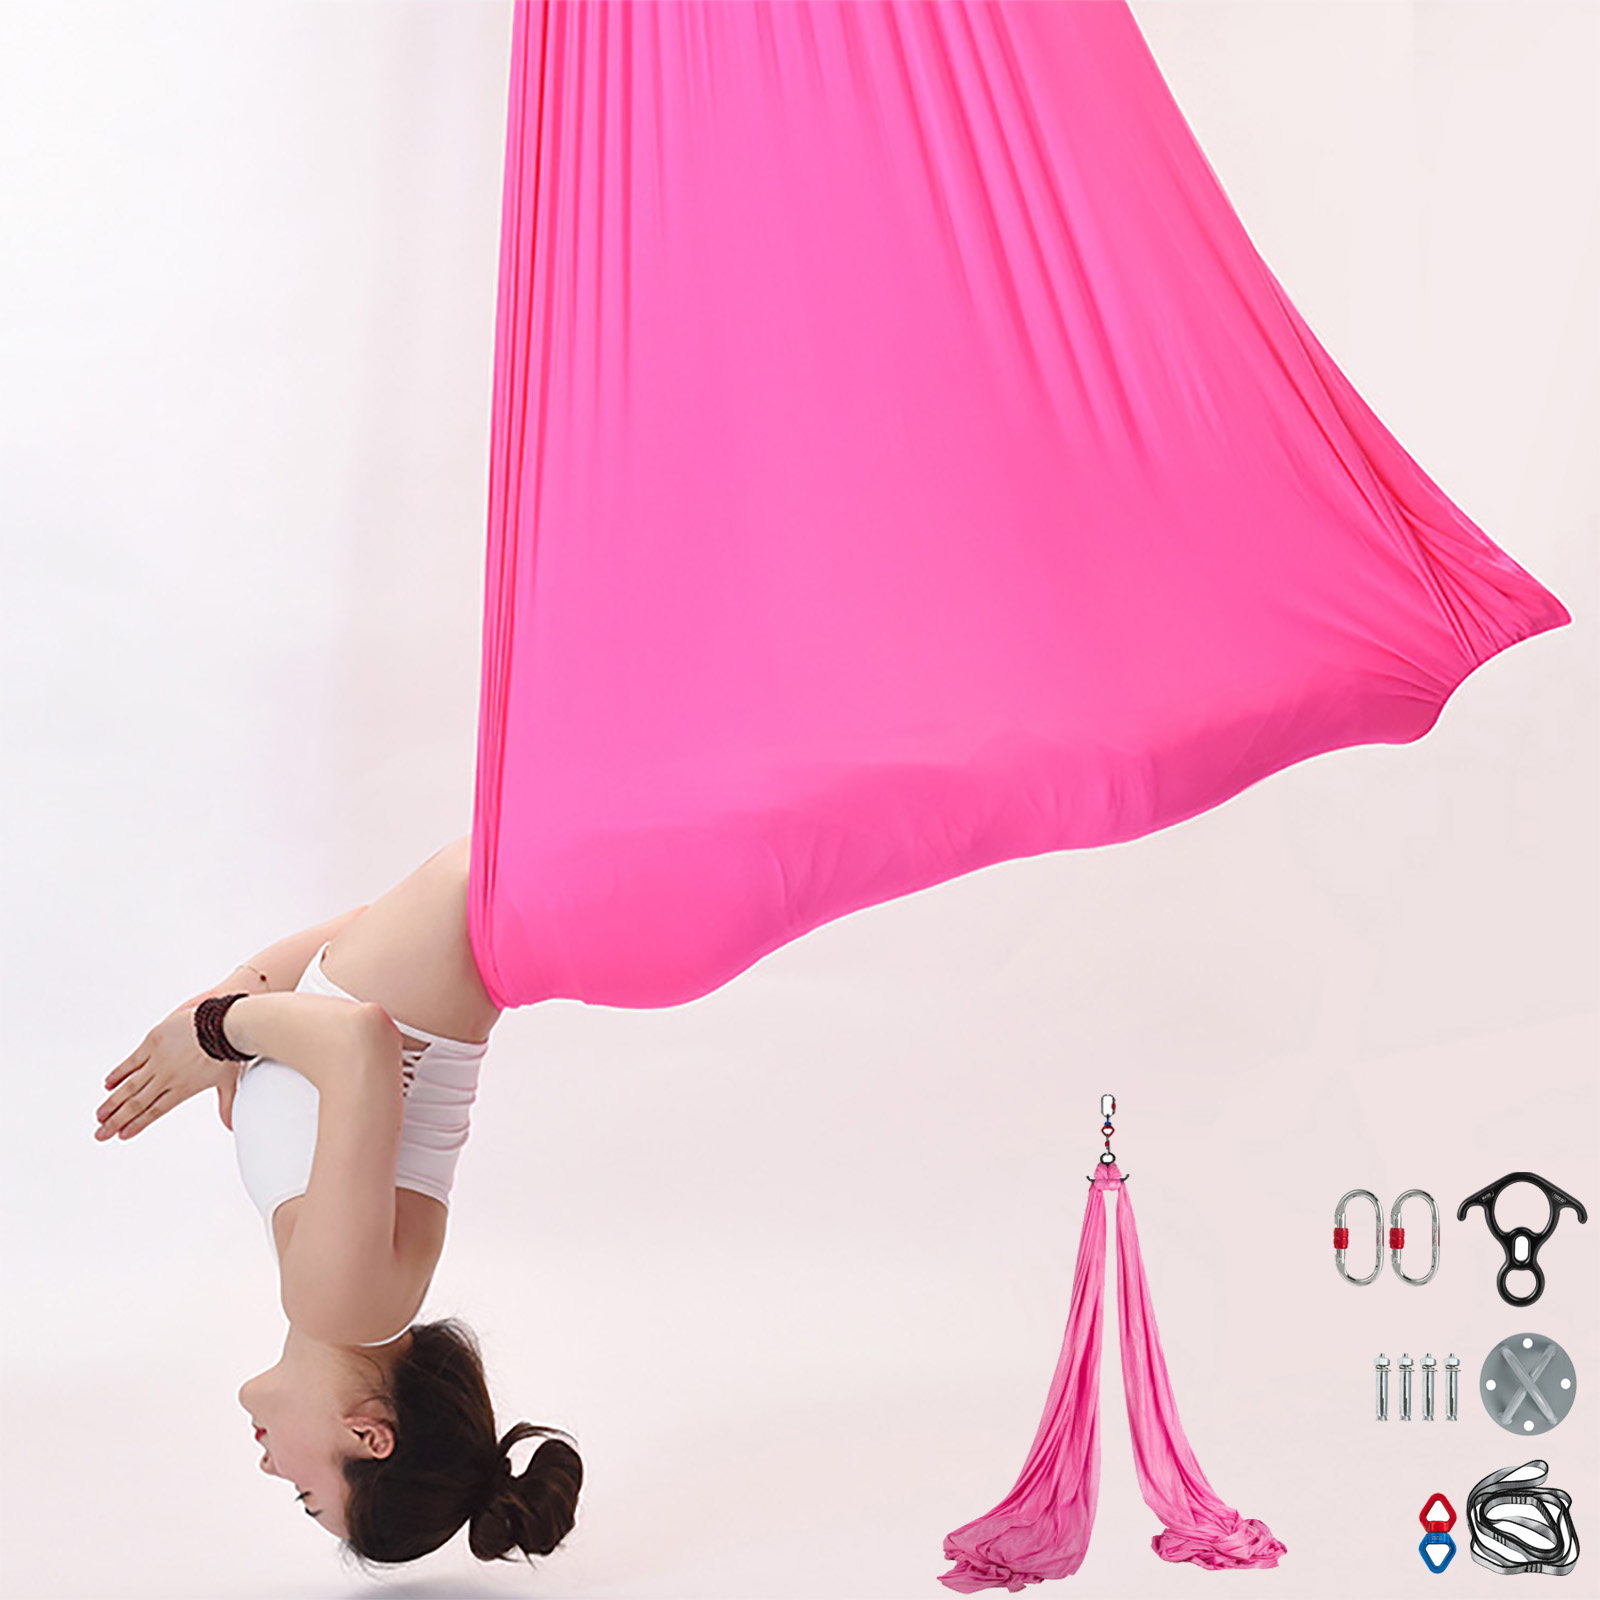 Aerial Silk 11Yards Yoga Swing Hammock Trapeze Antigravity Pilates